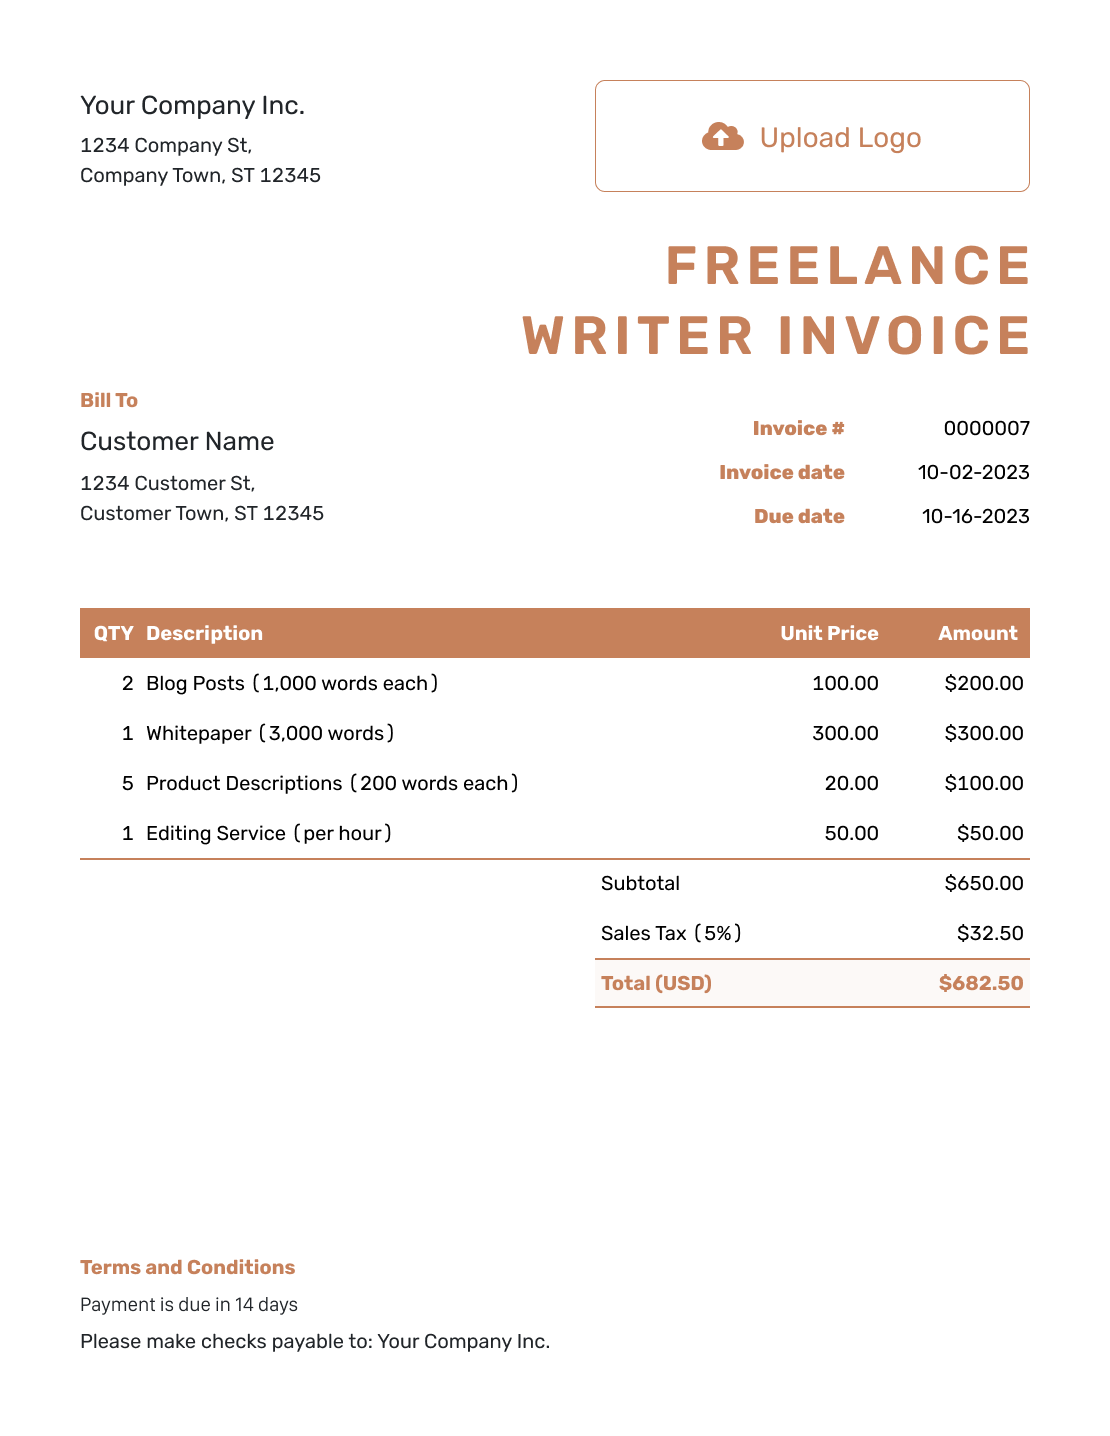 Standard Freelance Writer Invoice Template